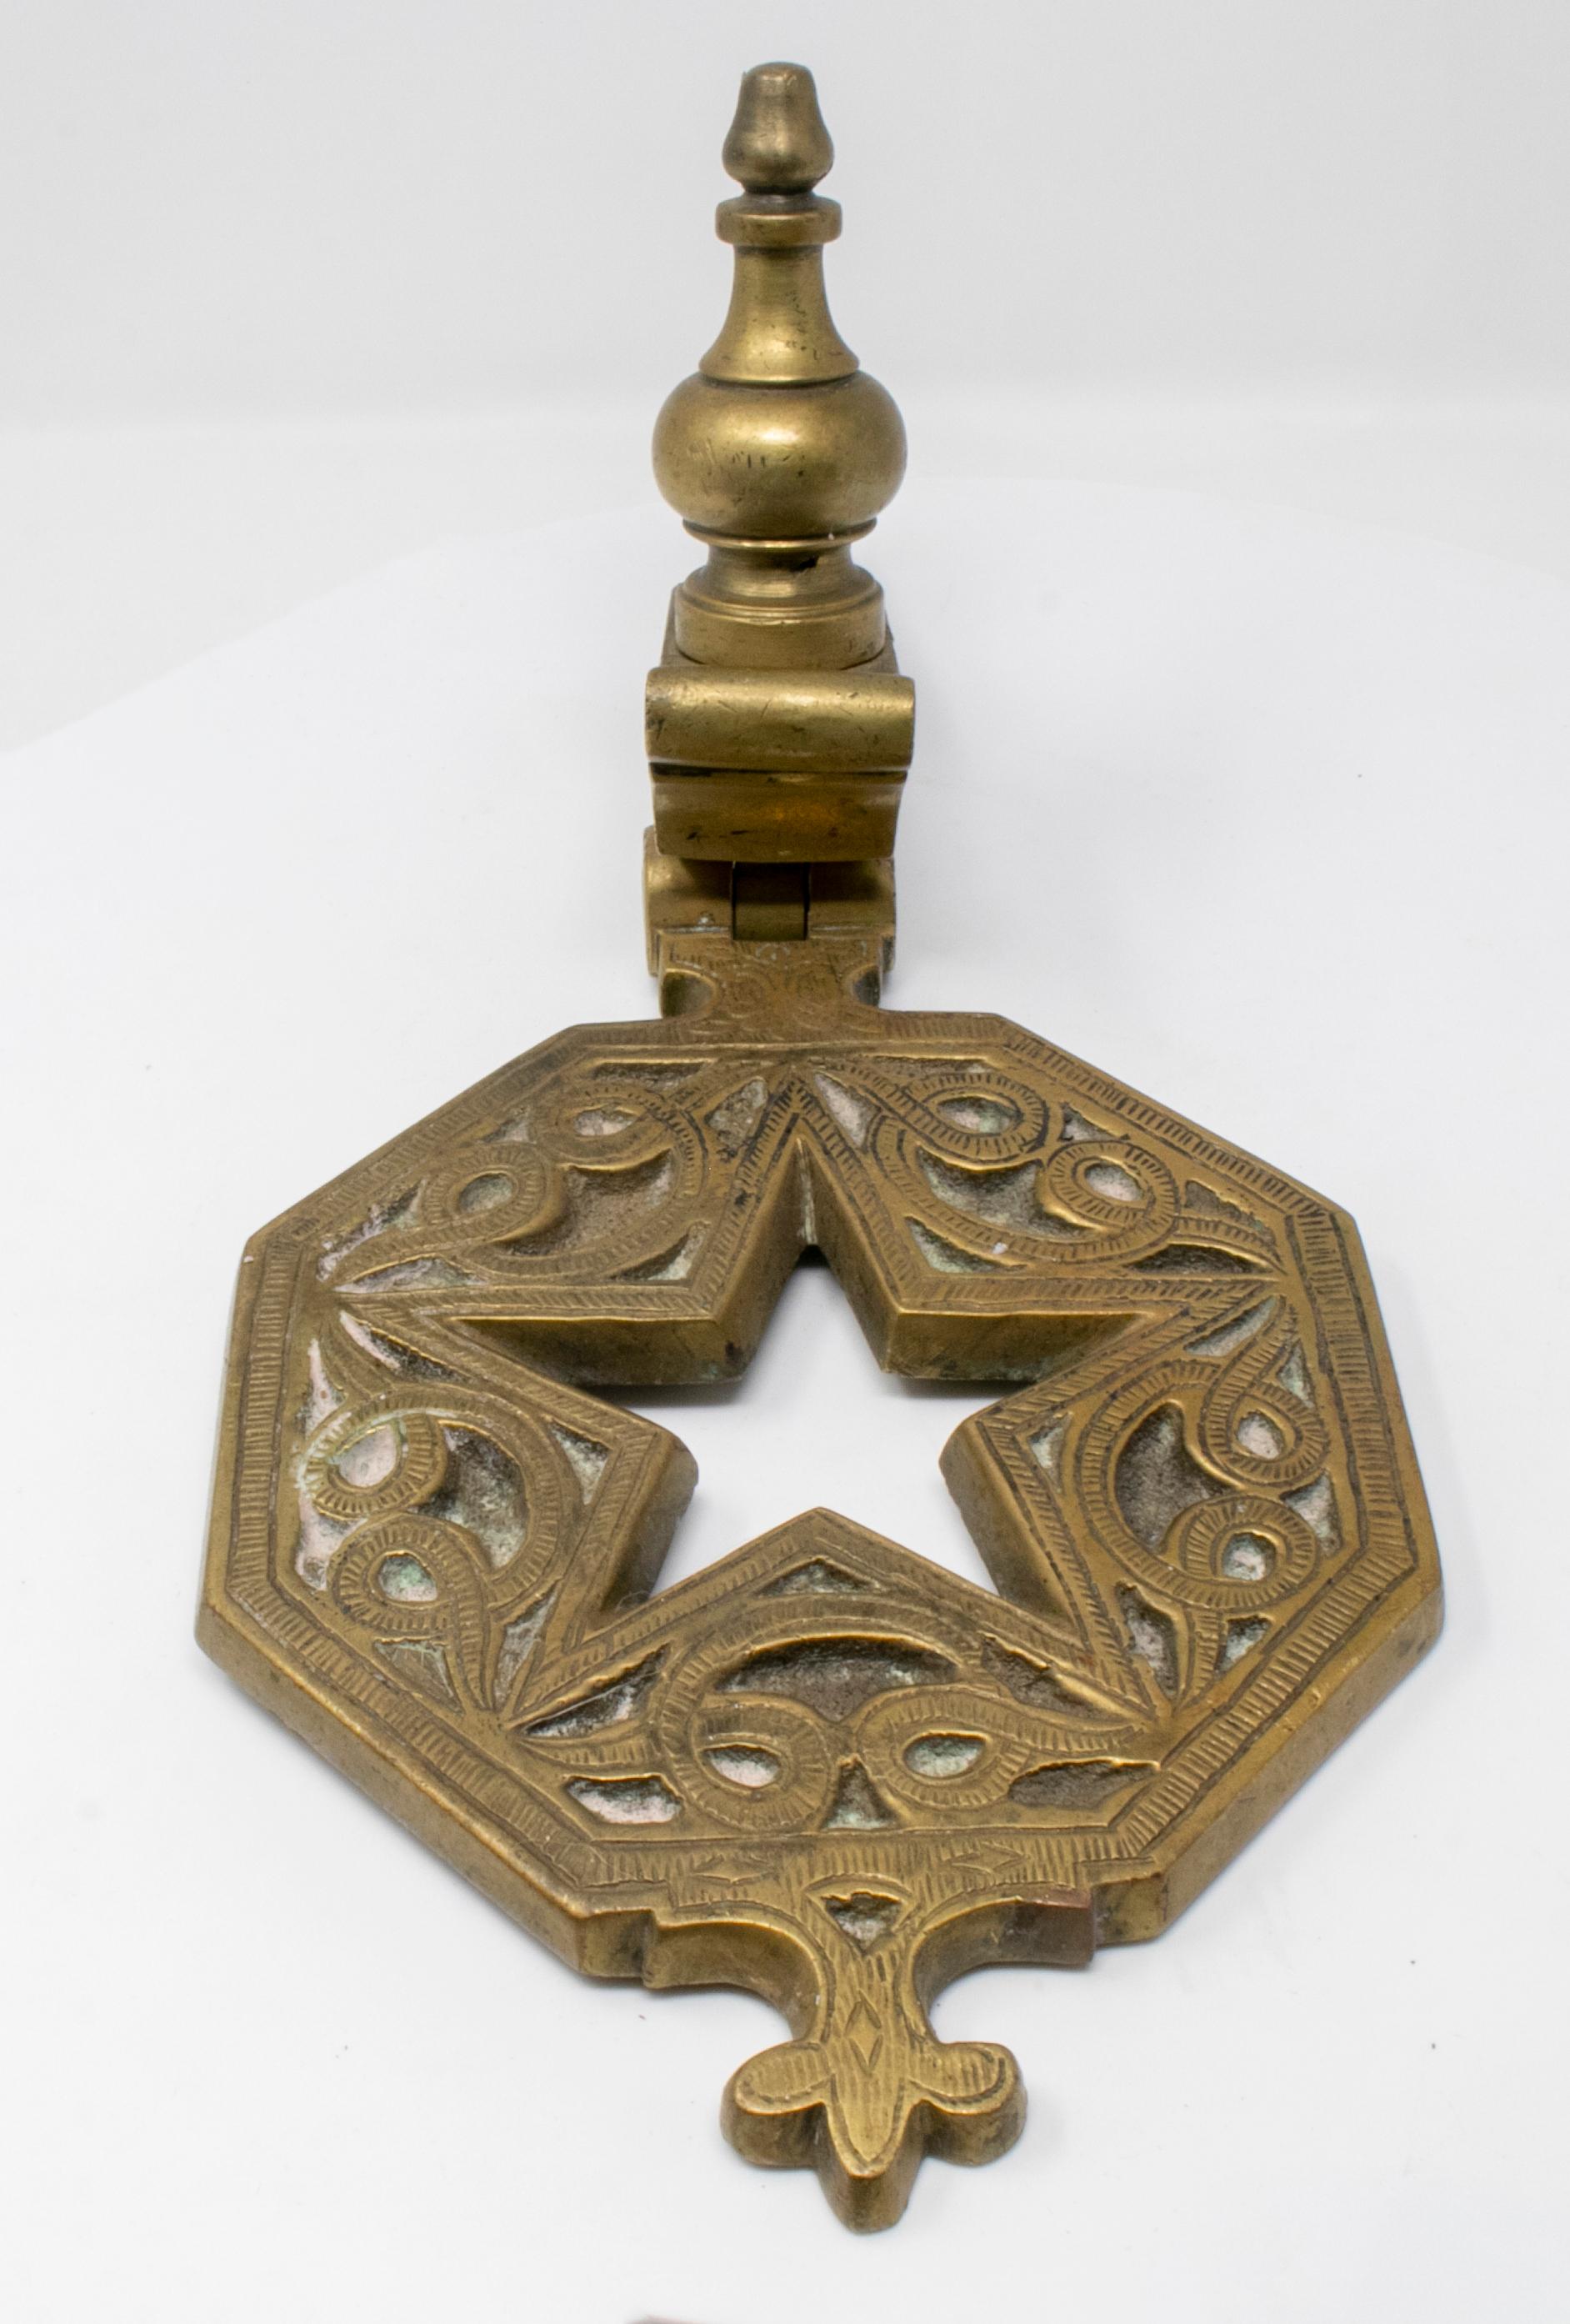 Late 19th century bronze star shaped door knock.